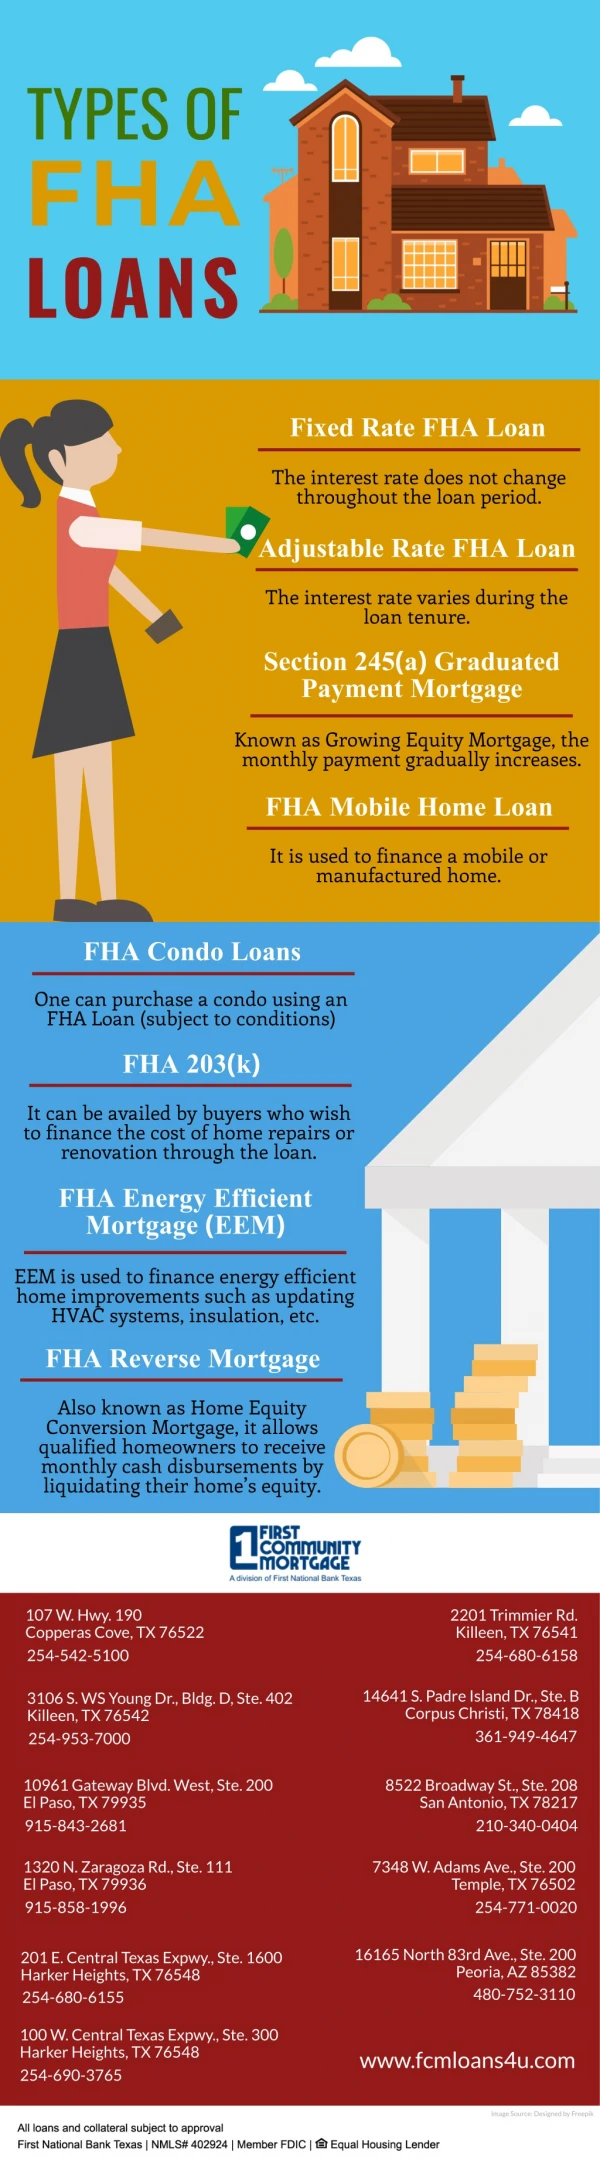 Types Of FHA Loans